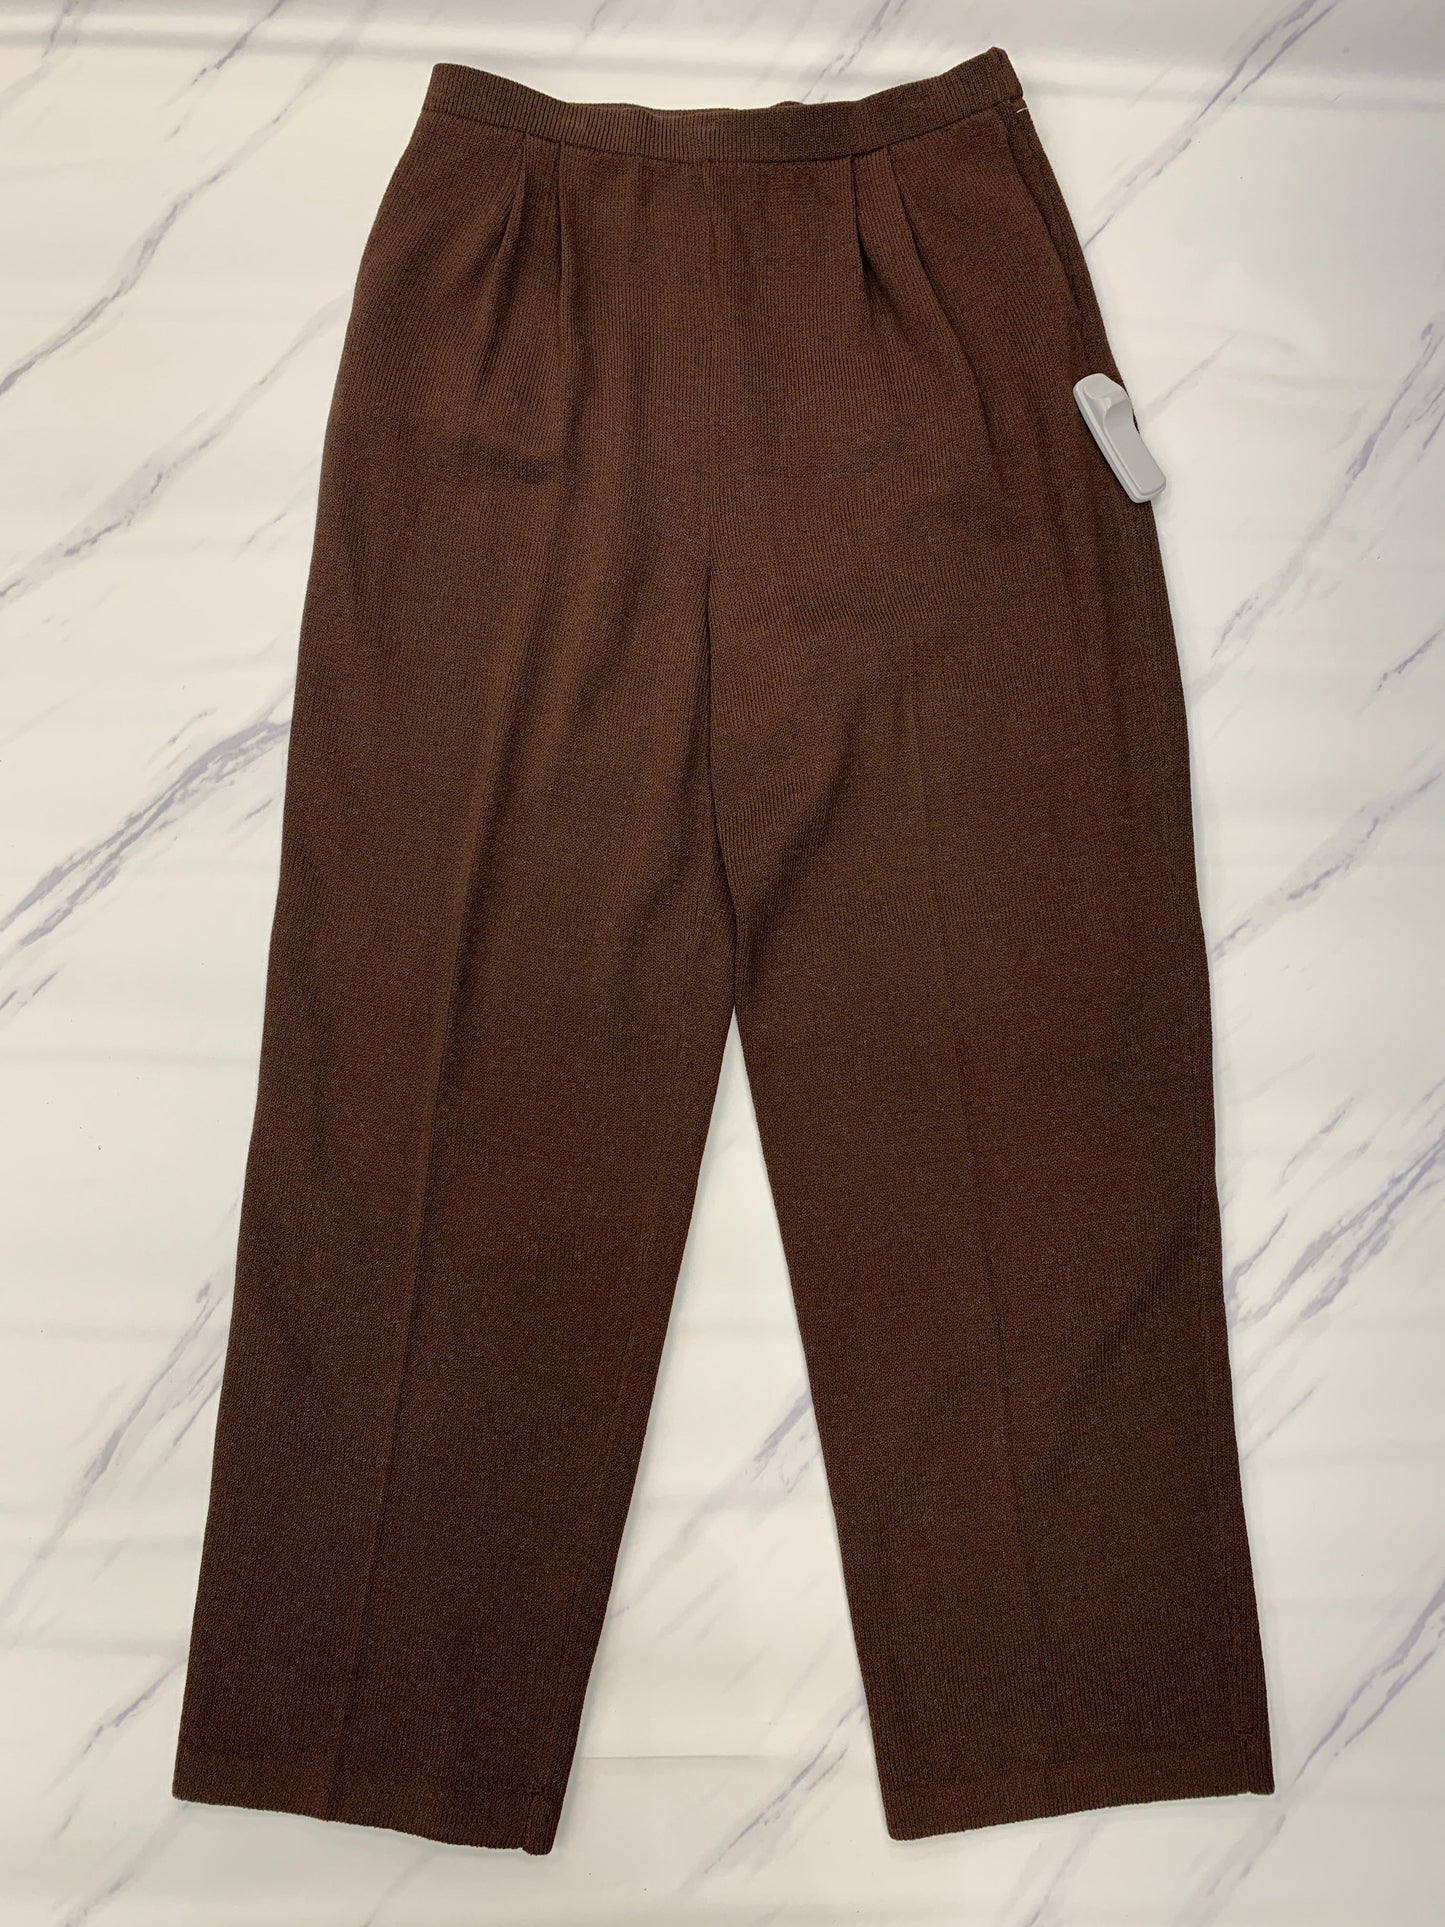 Brown Pants Designer St John Collection, Size 12